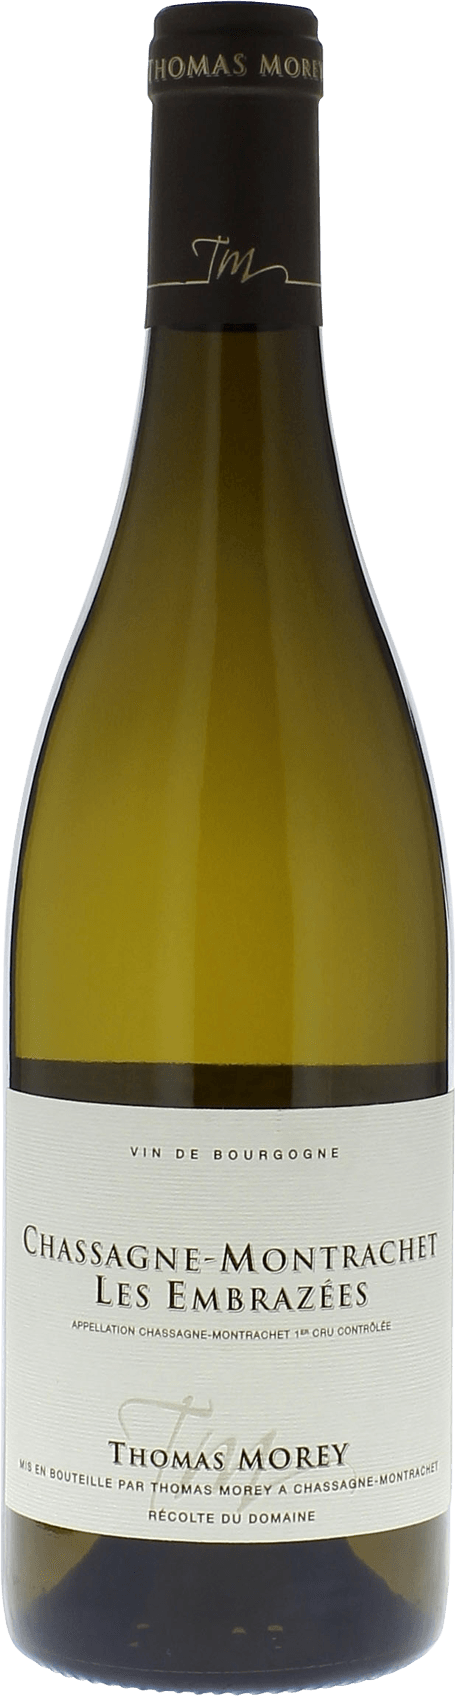 Chassagne montrachet 1er cru embrazes 2016 Domaine MOREY Thomas, Bourgogne blanc